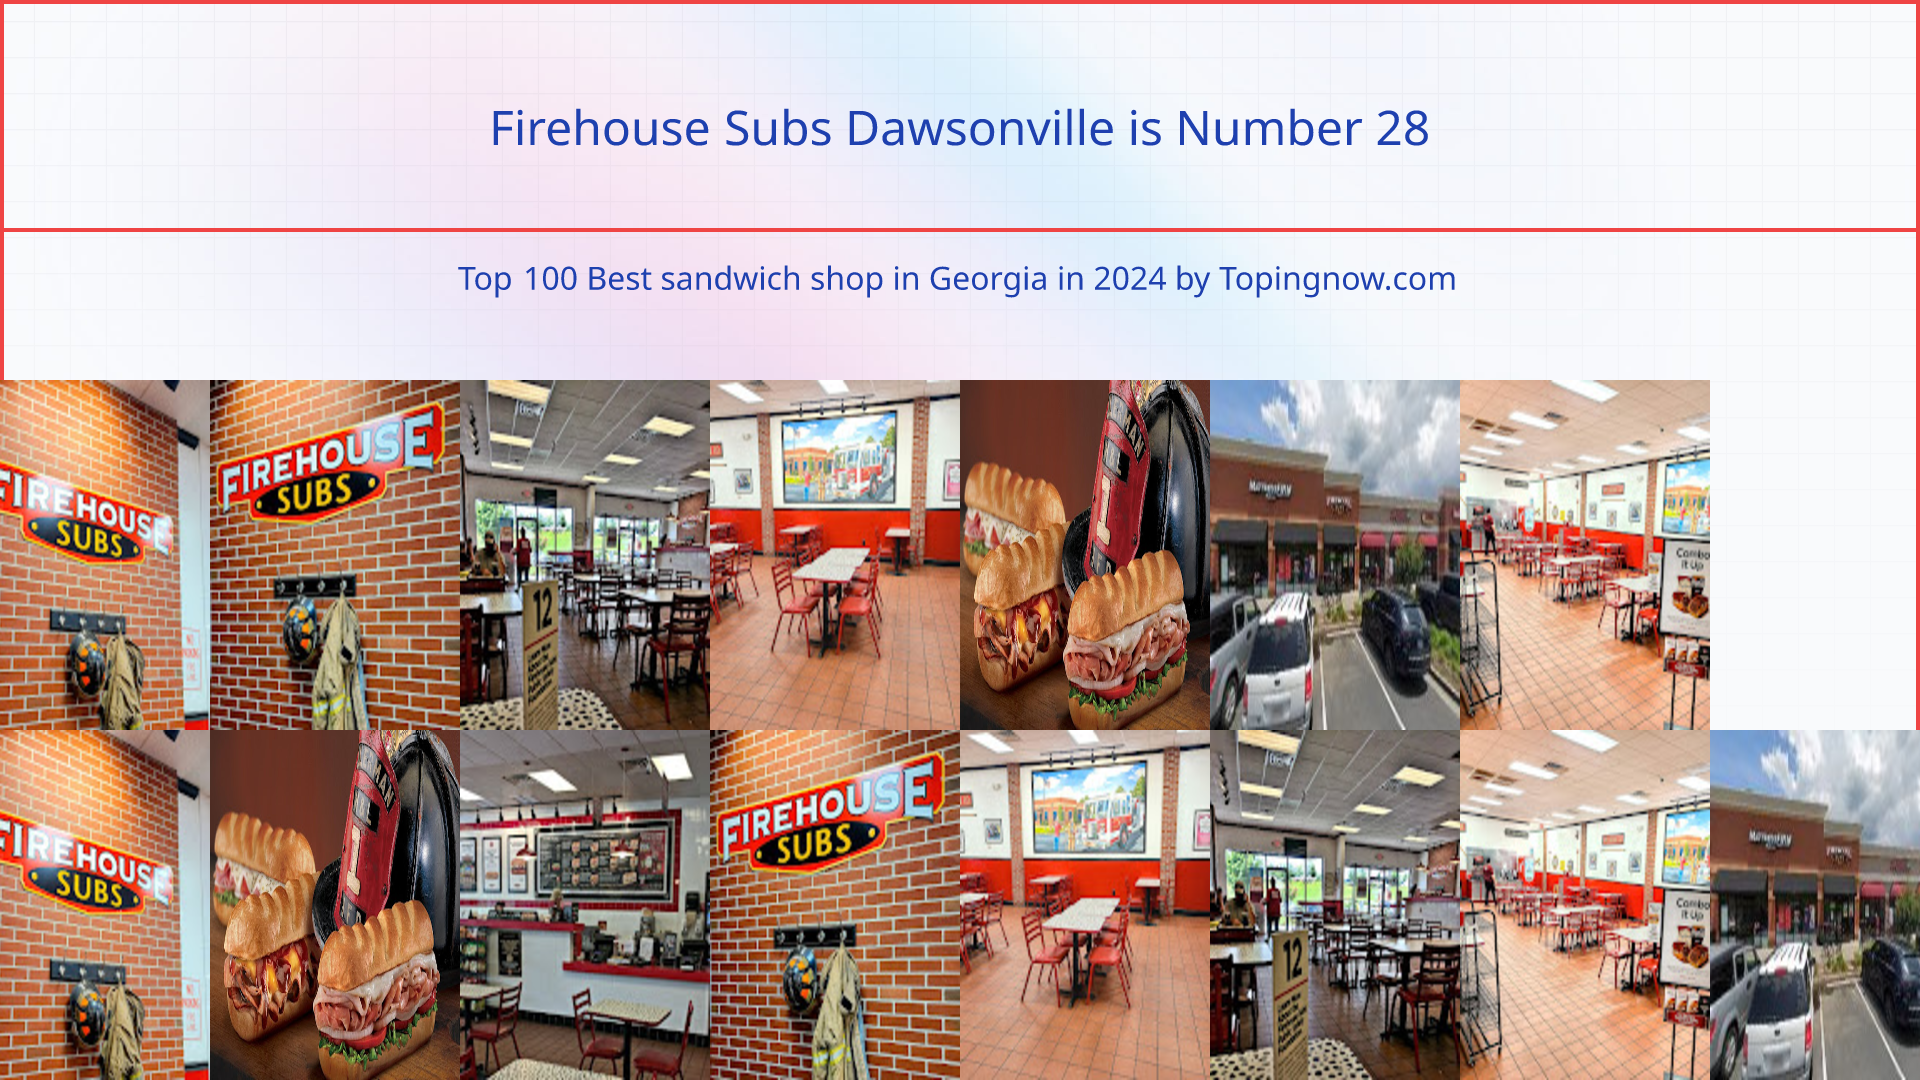 Firehouse Subs Dawsonville: Top 100 Best sandwich shop in Georgia in 2024